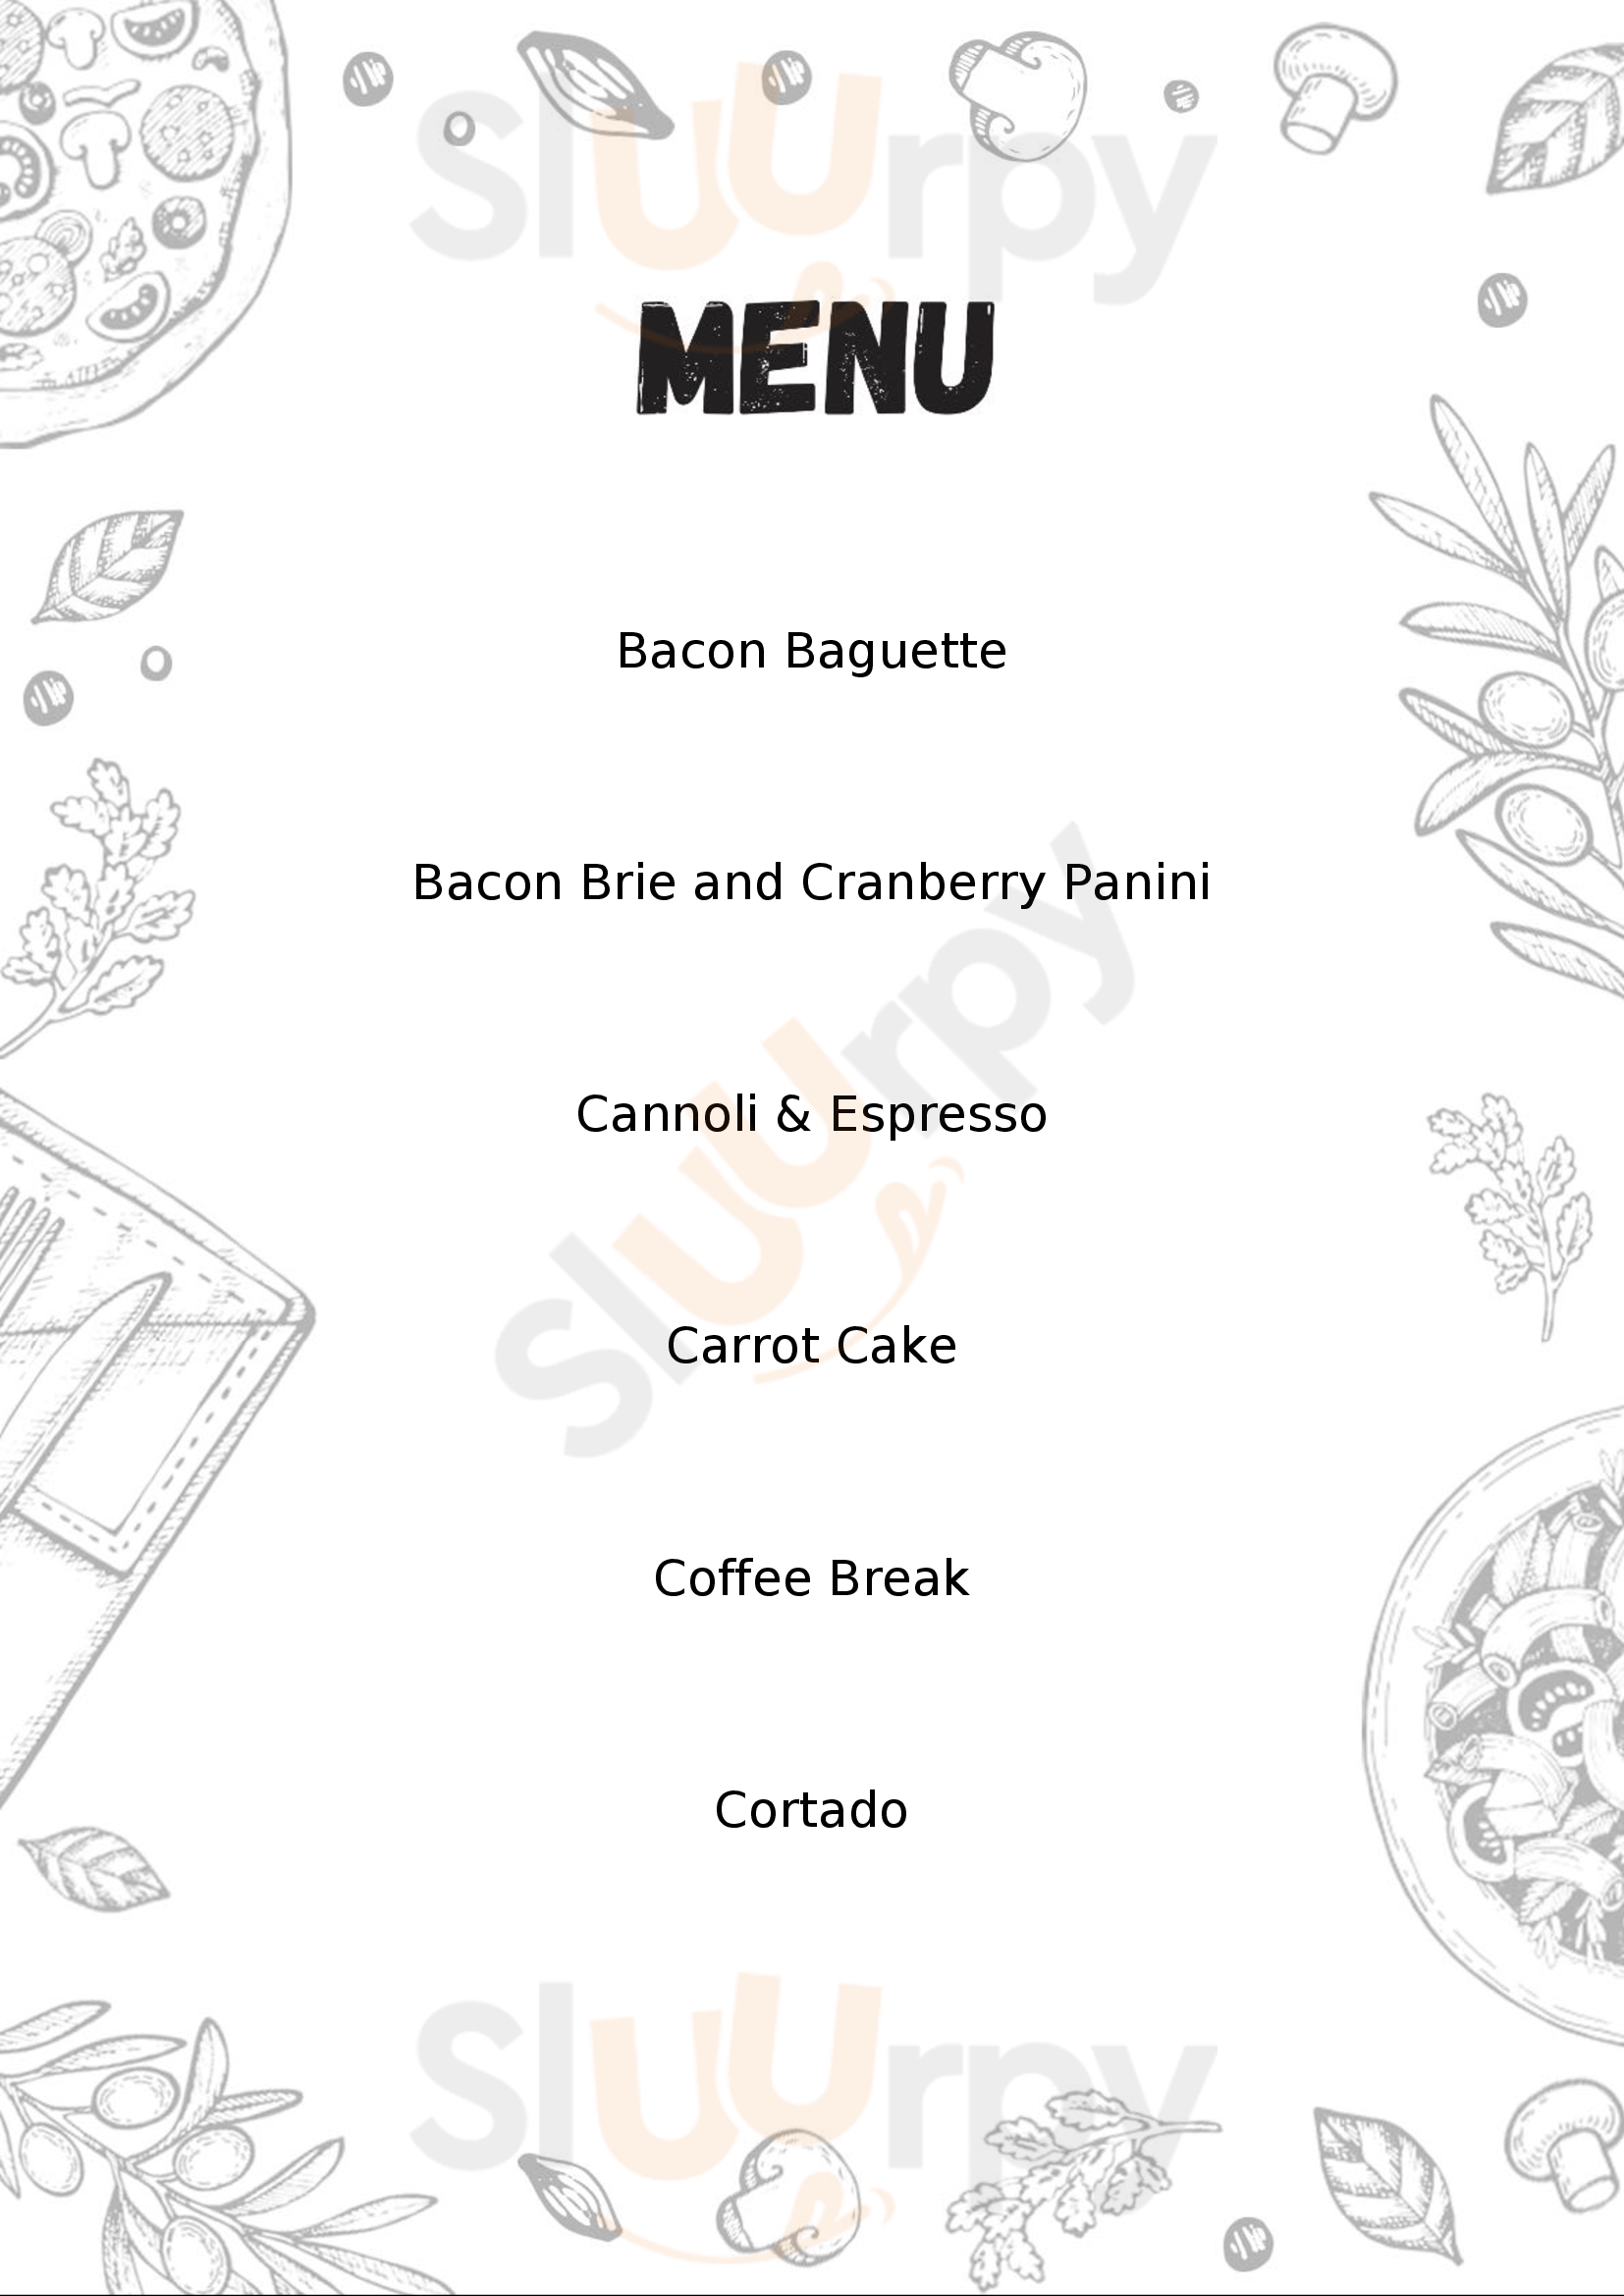 Marco's Cafe Barry Menu - 1